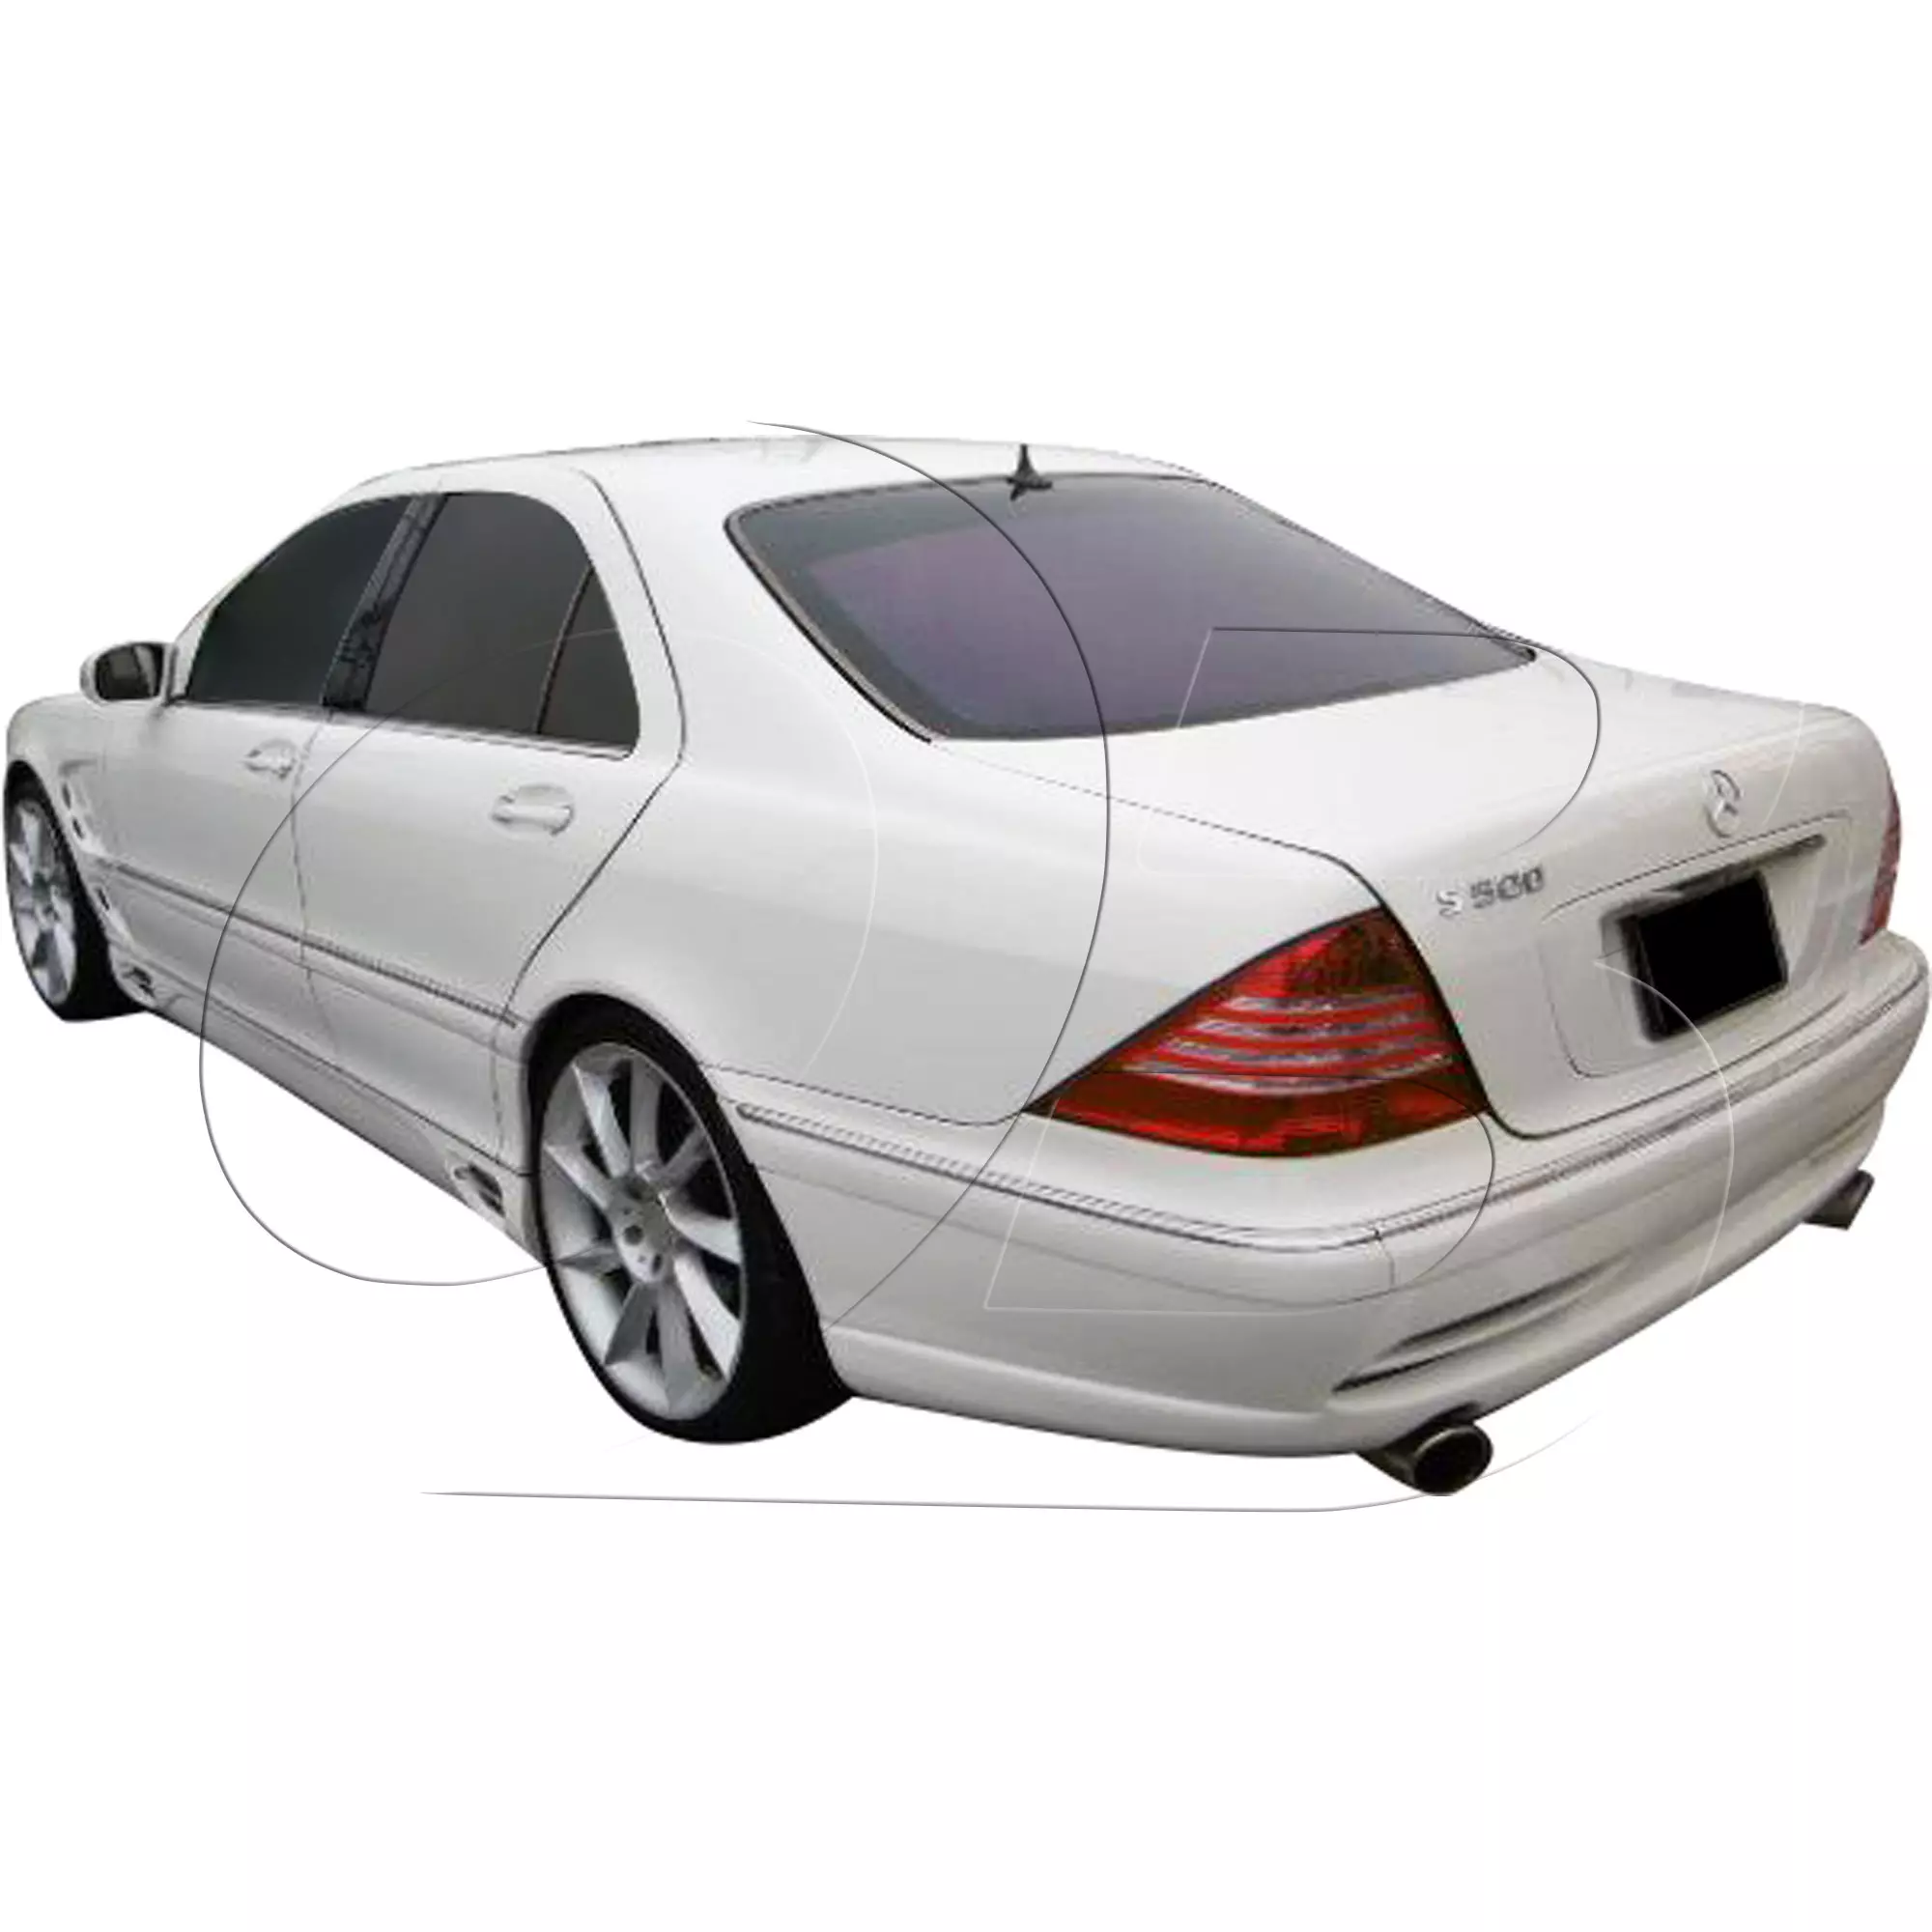 KBD Urethane LRS Style 1pc Rear Bumper > Mercedes S Class 2000-2002 - Image 5